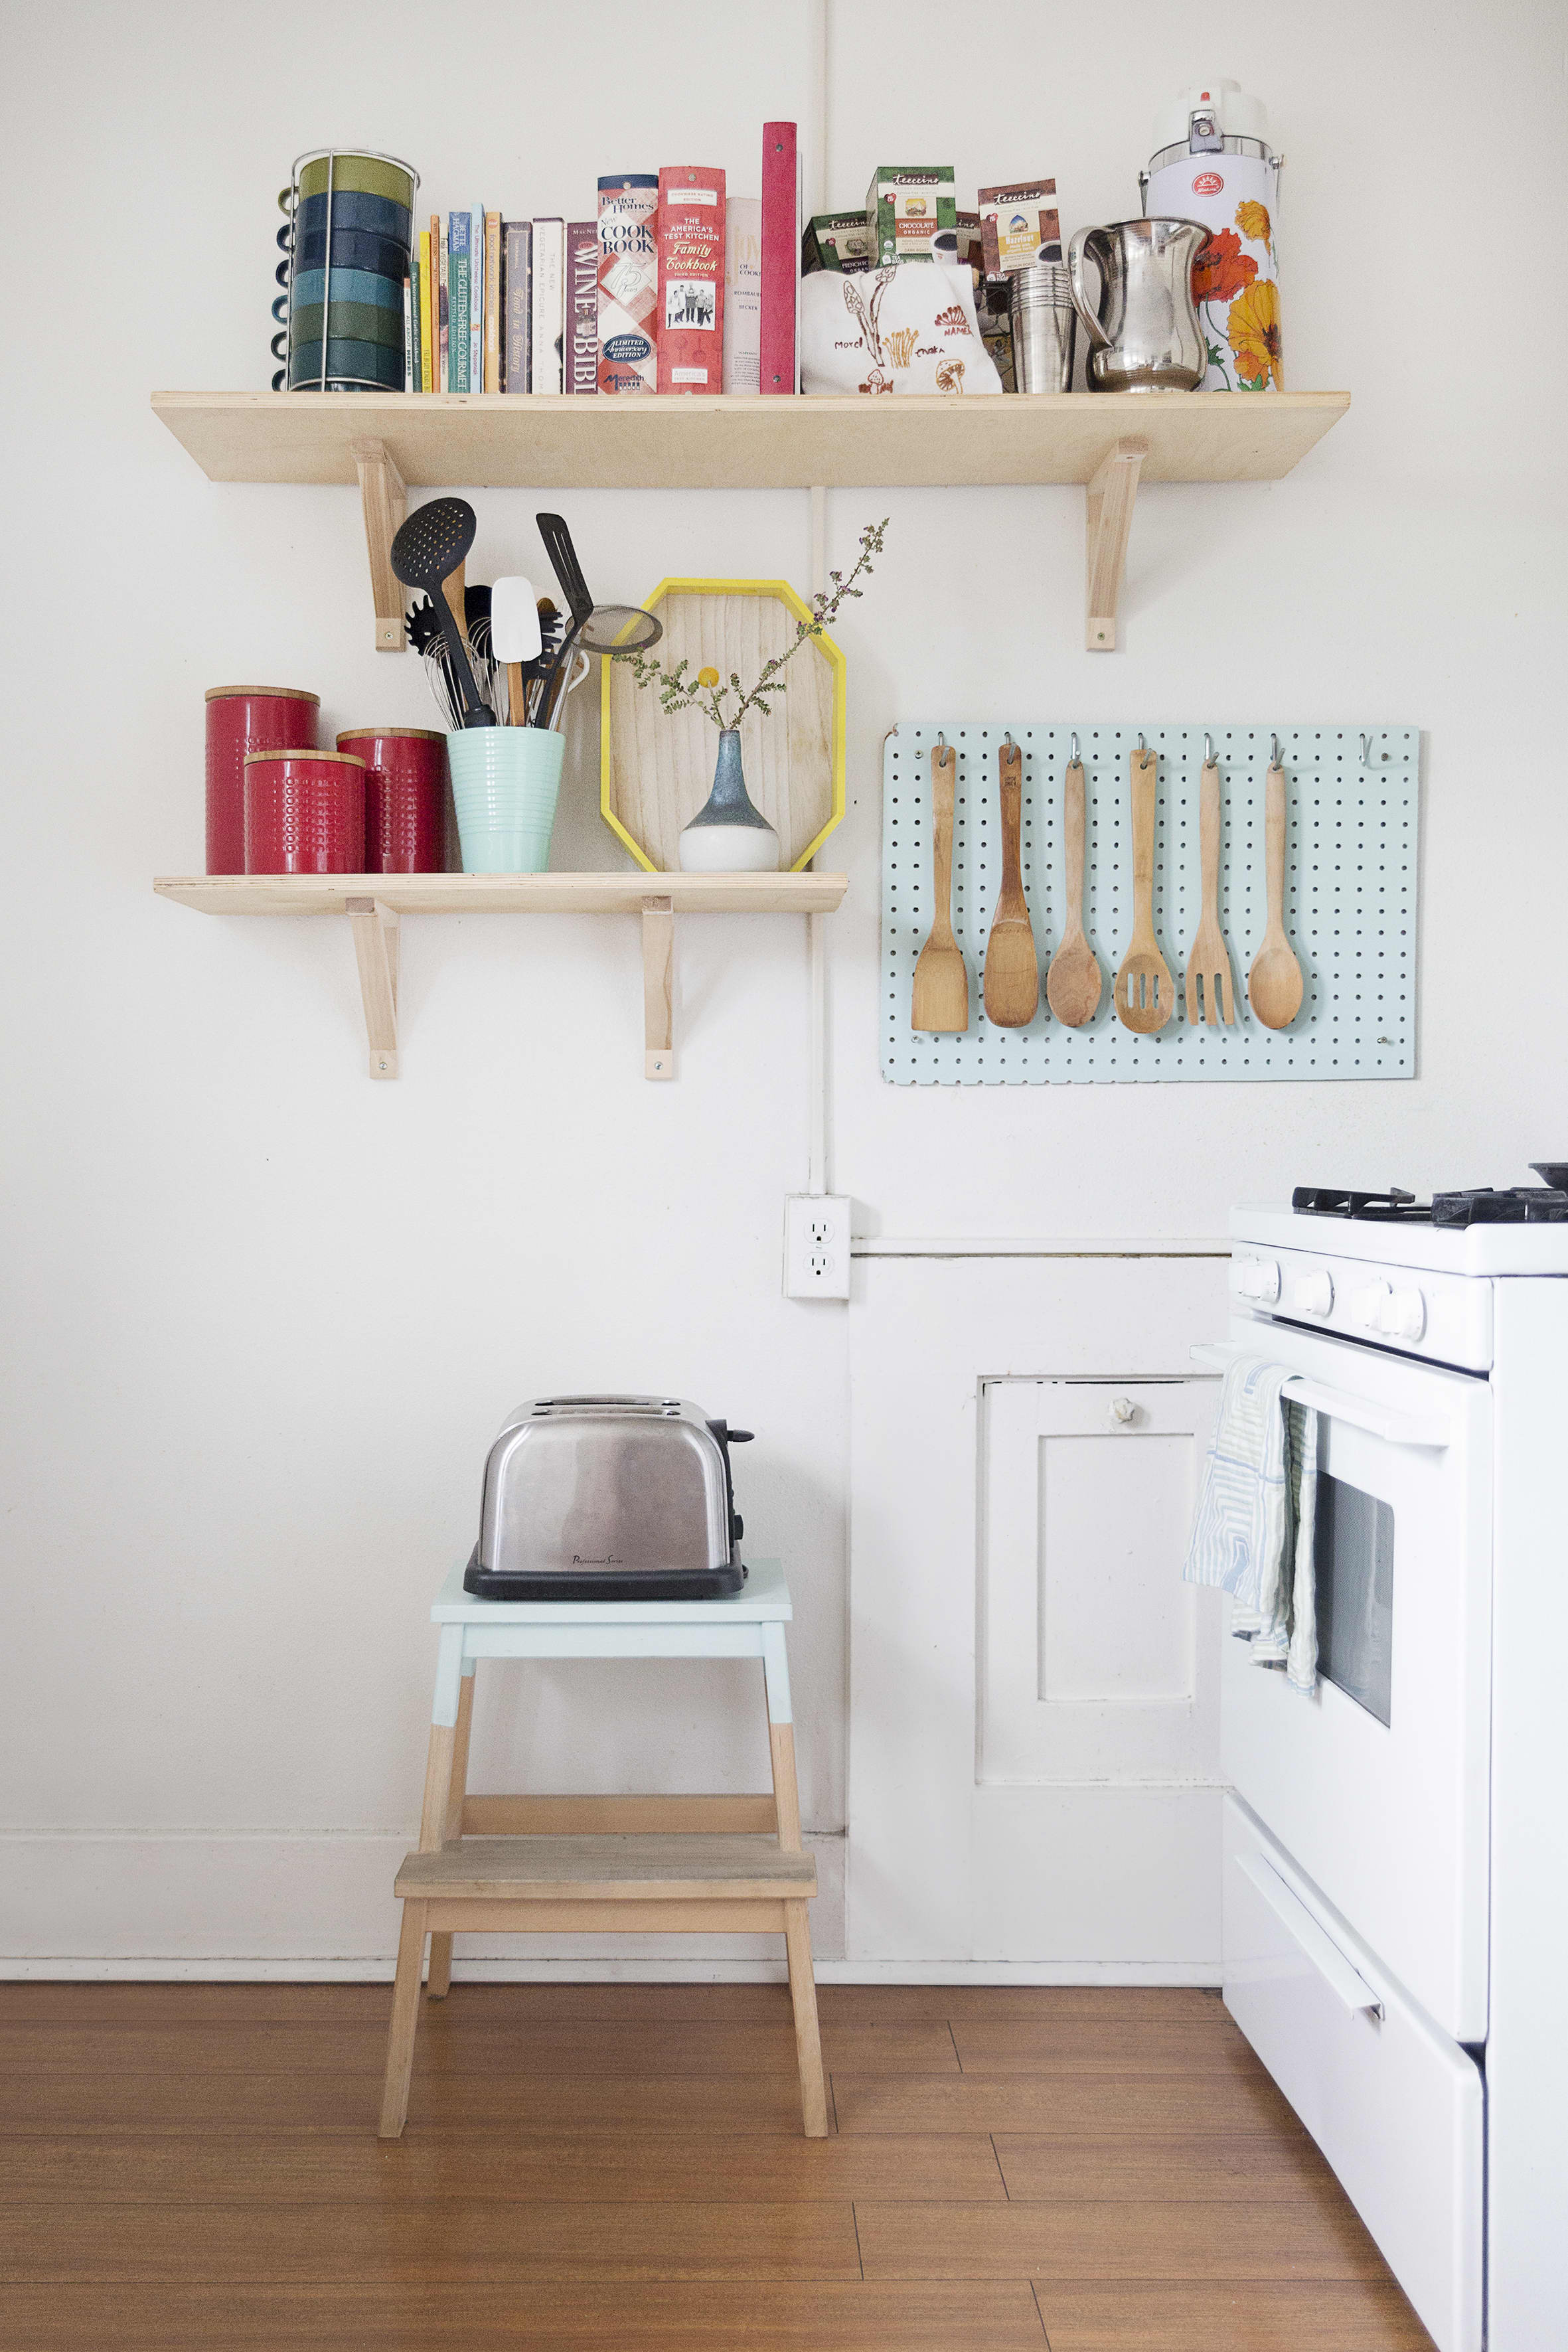 Best Small Kitchen Design Ideas - Smart Small Kitchen ...